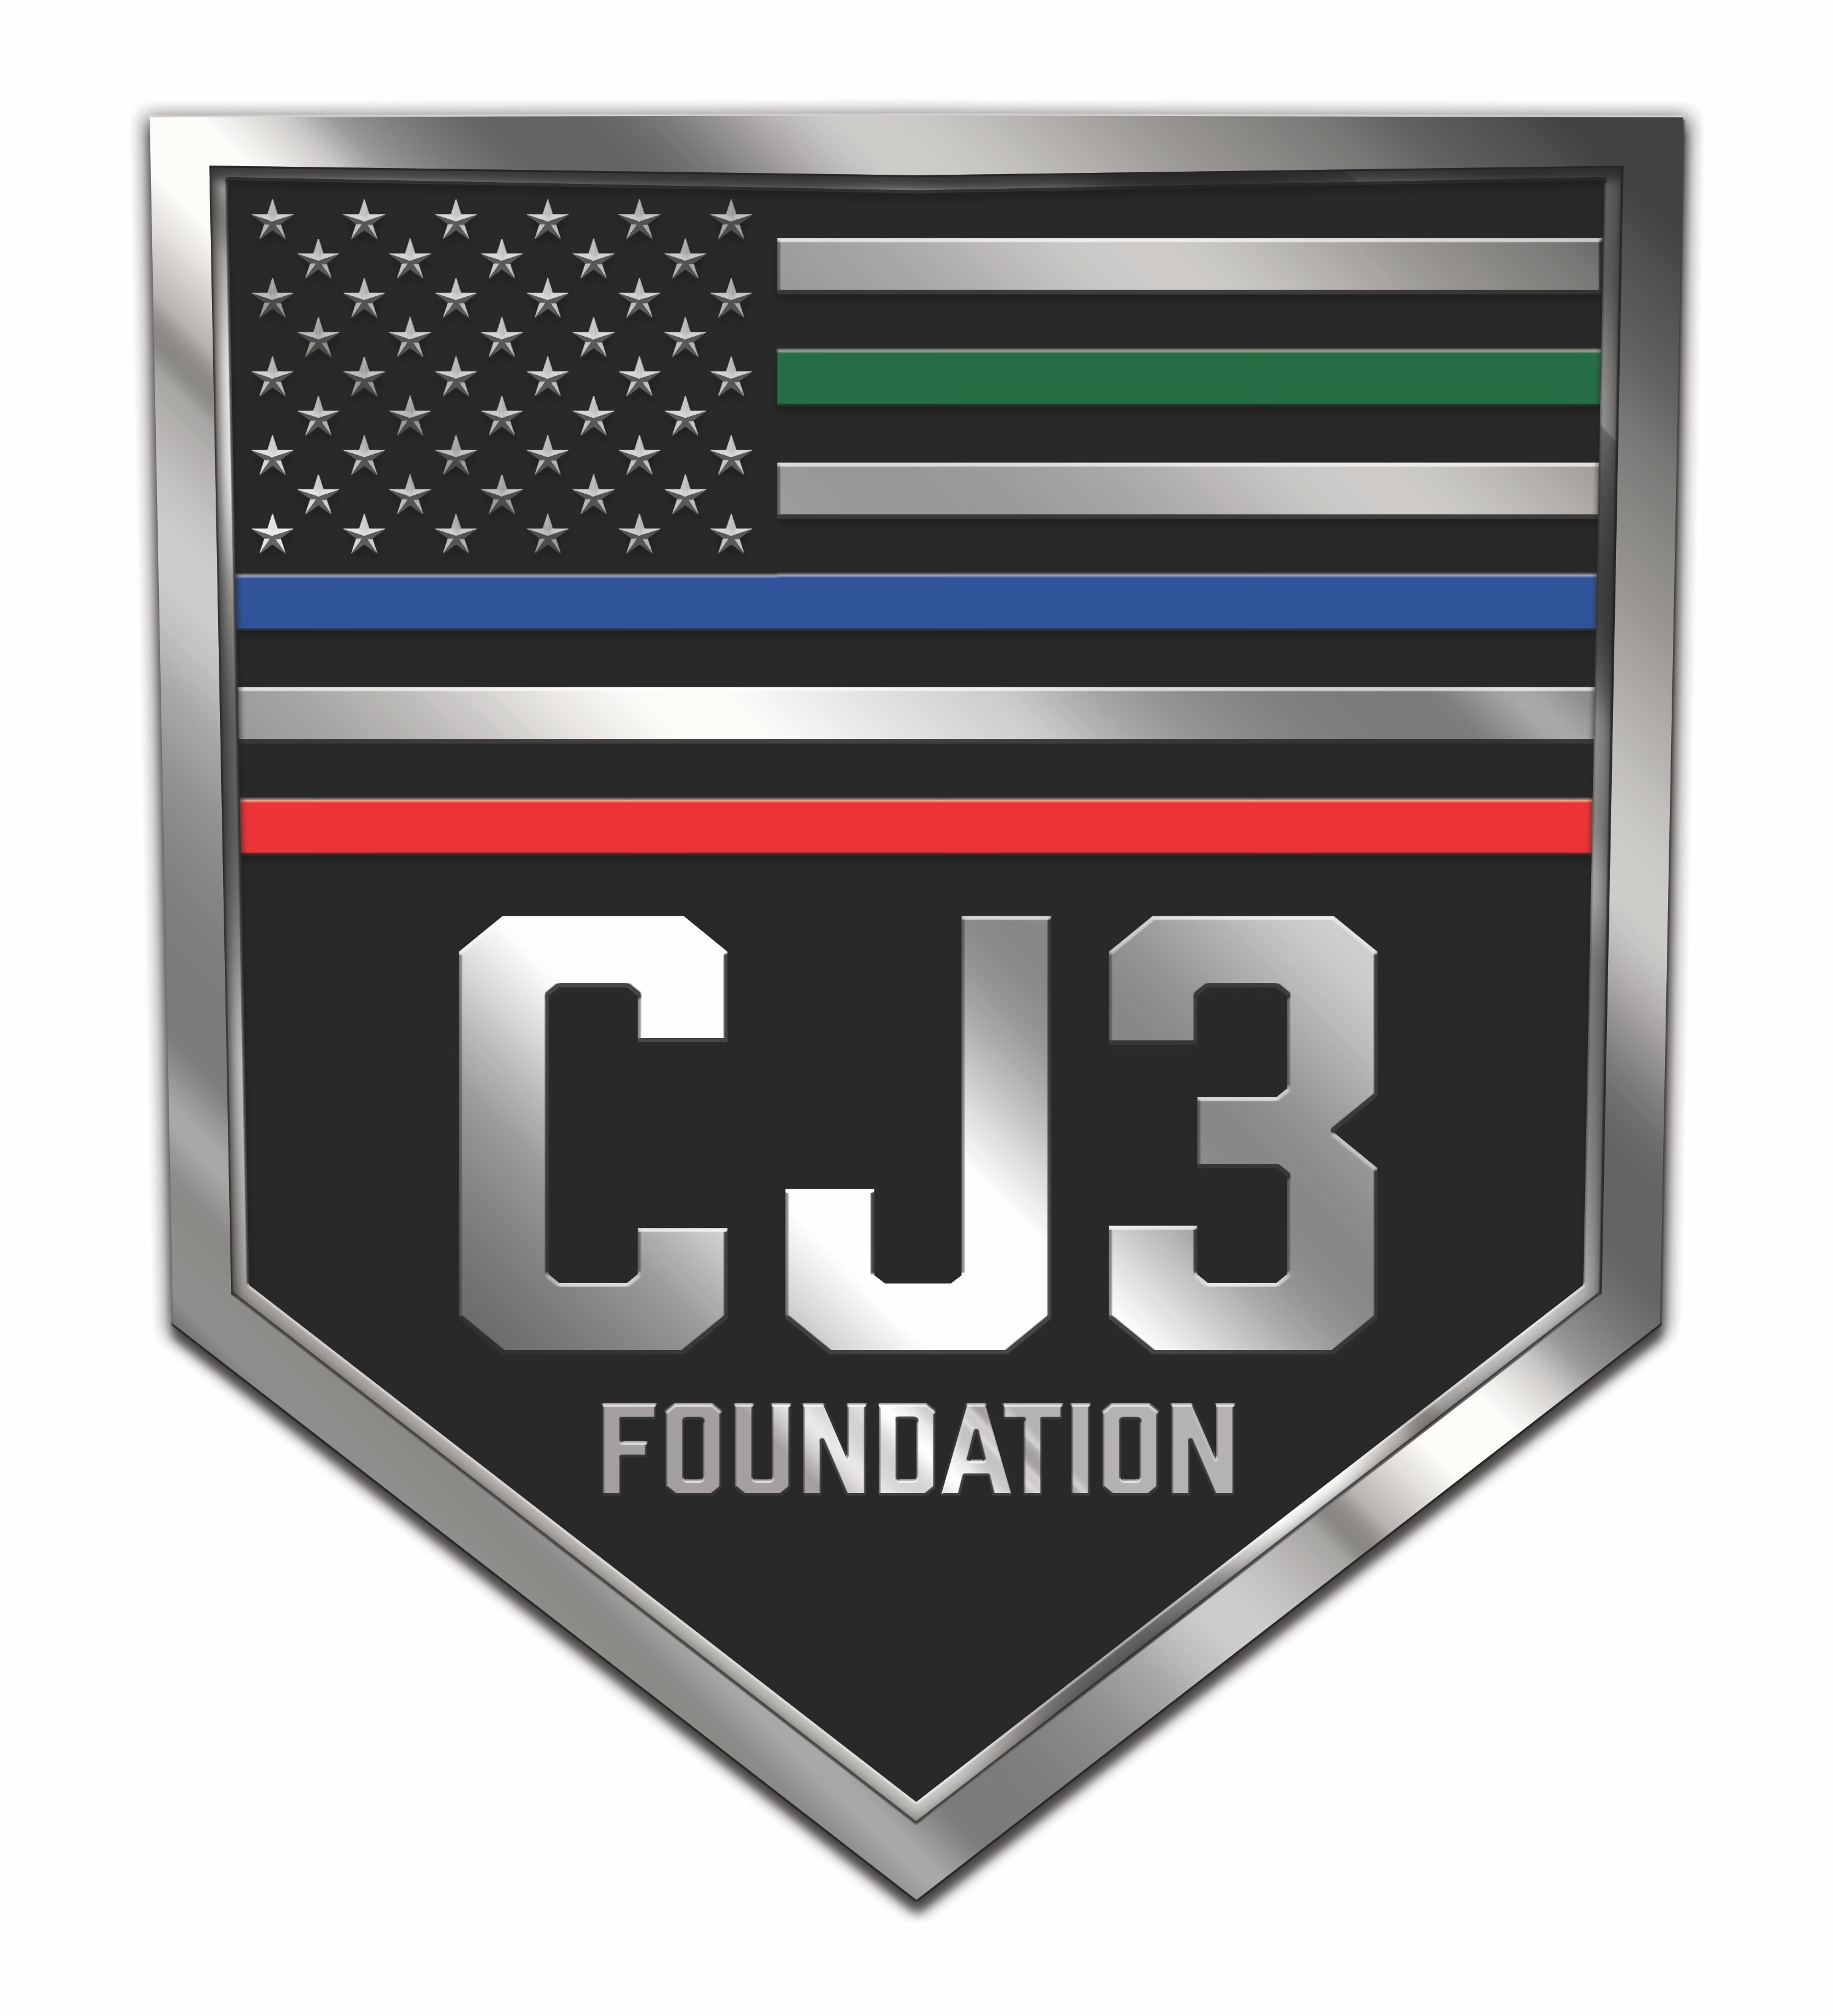 CJ3 Foundation Partnership with KSOB